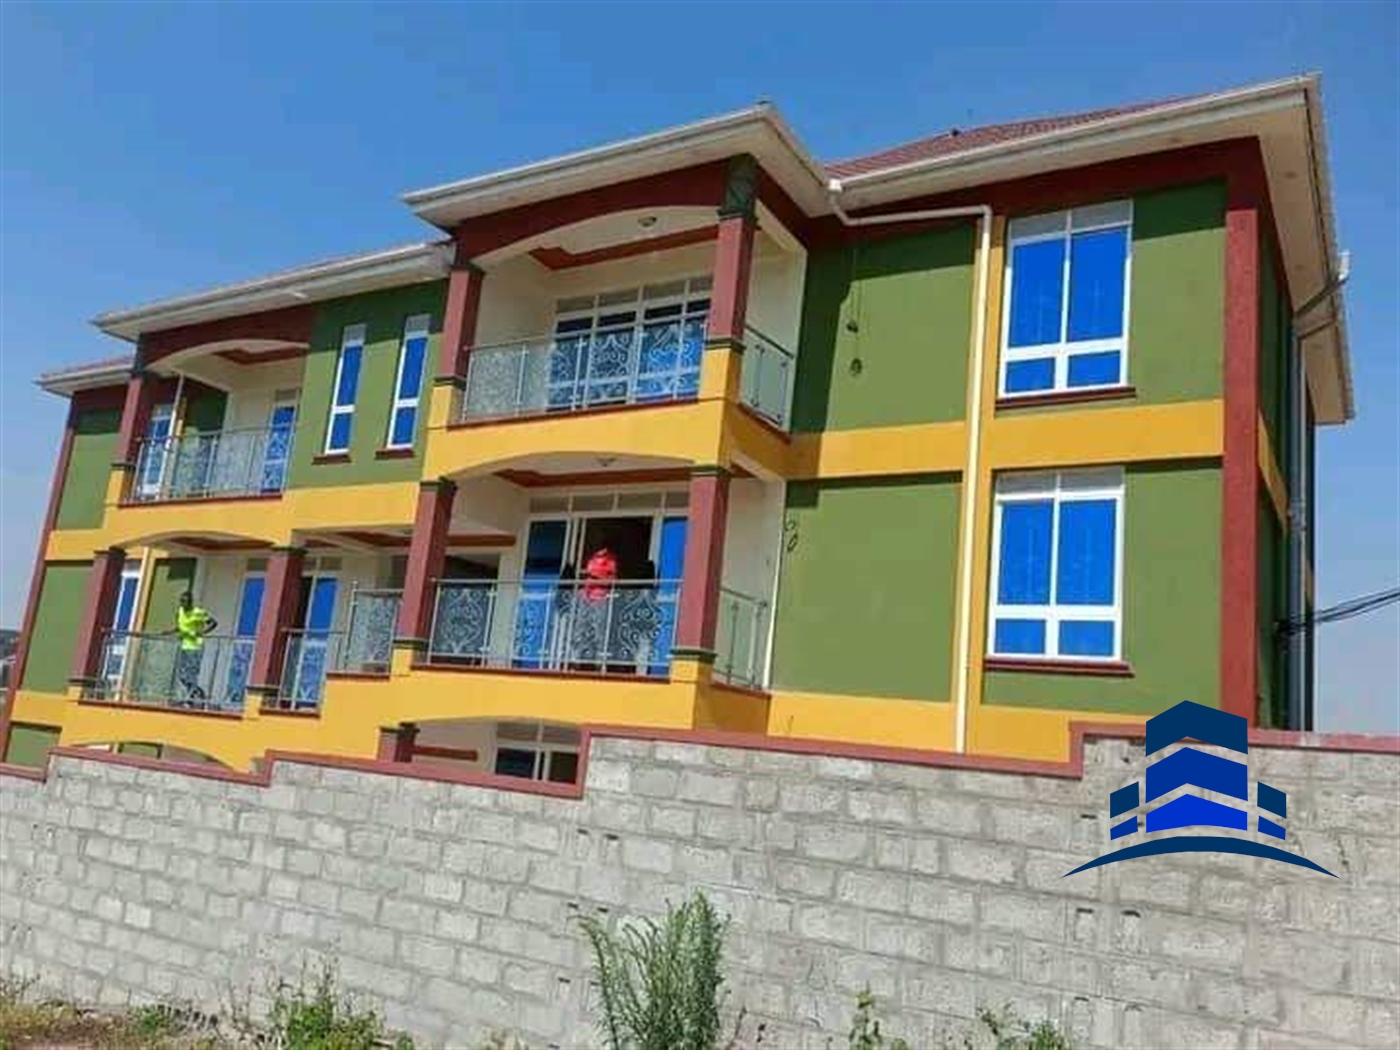 Apartment block for sale in Garuga Wakiso